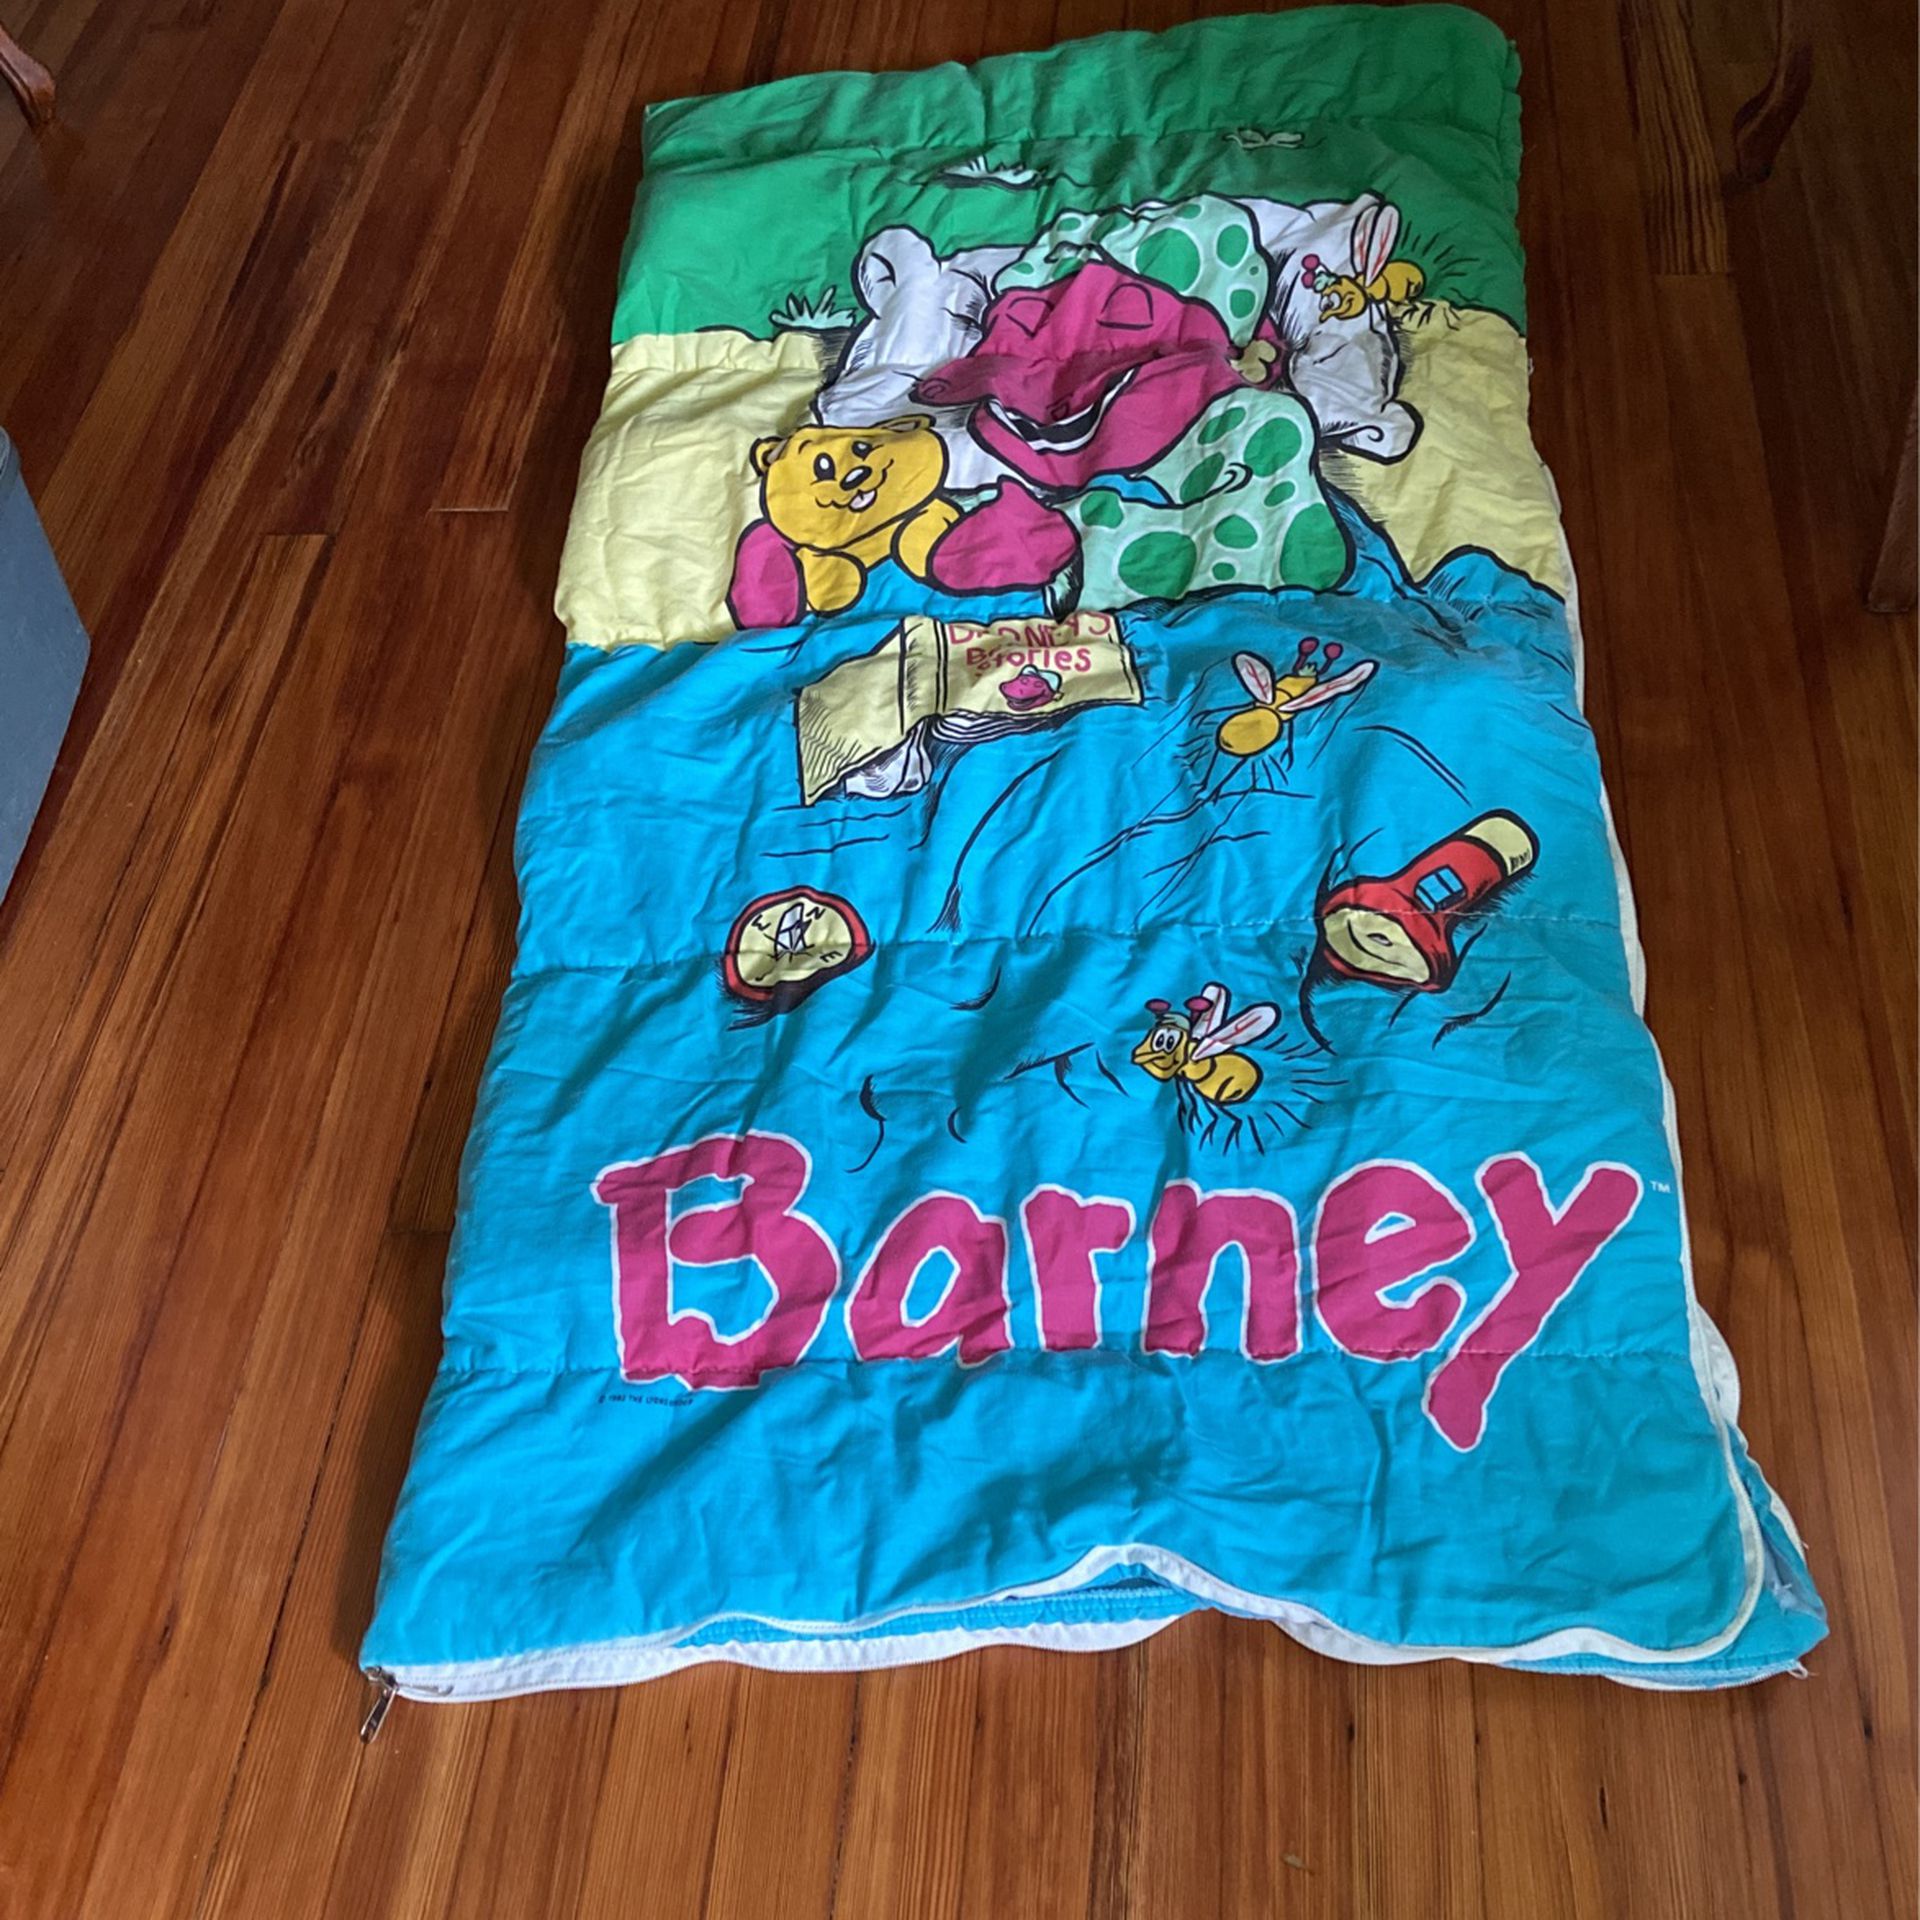 Vintage Barney Sleeping Bag